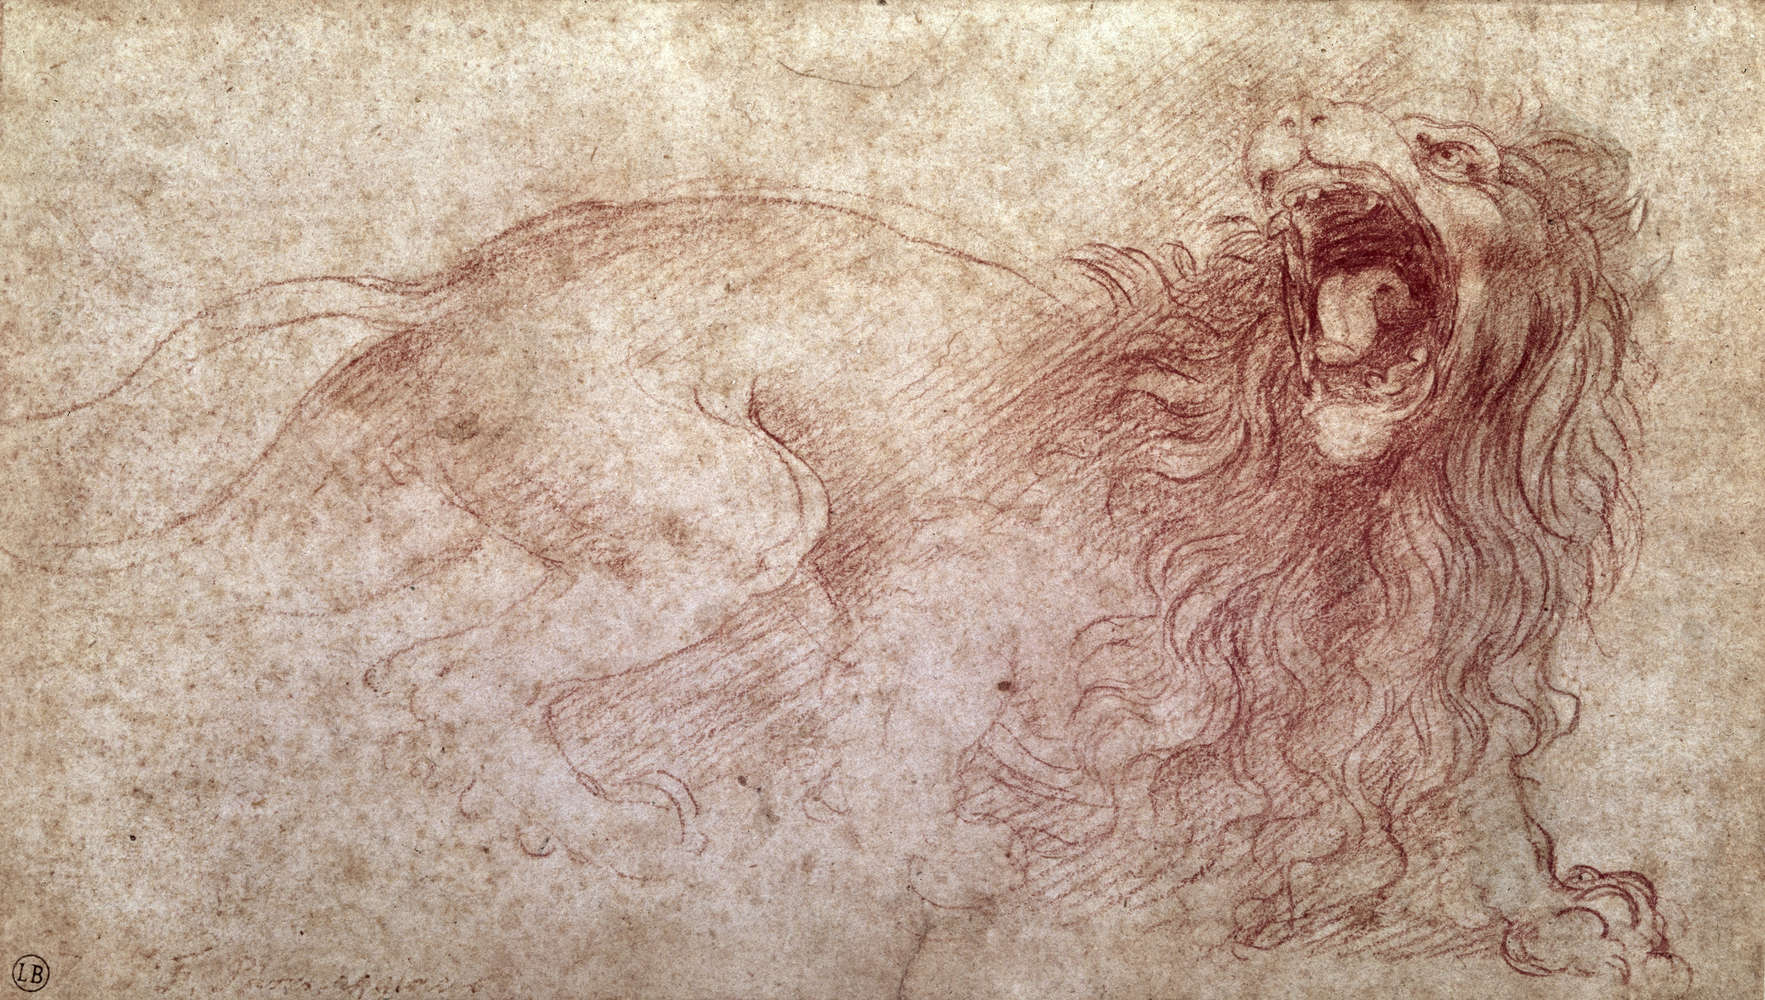             Fotomurali "Schizzo di un leone ruggente" di Leonardo da Vinci
        